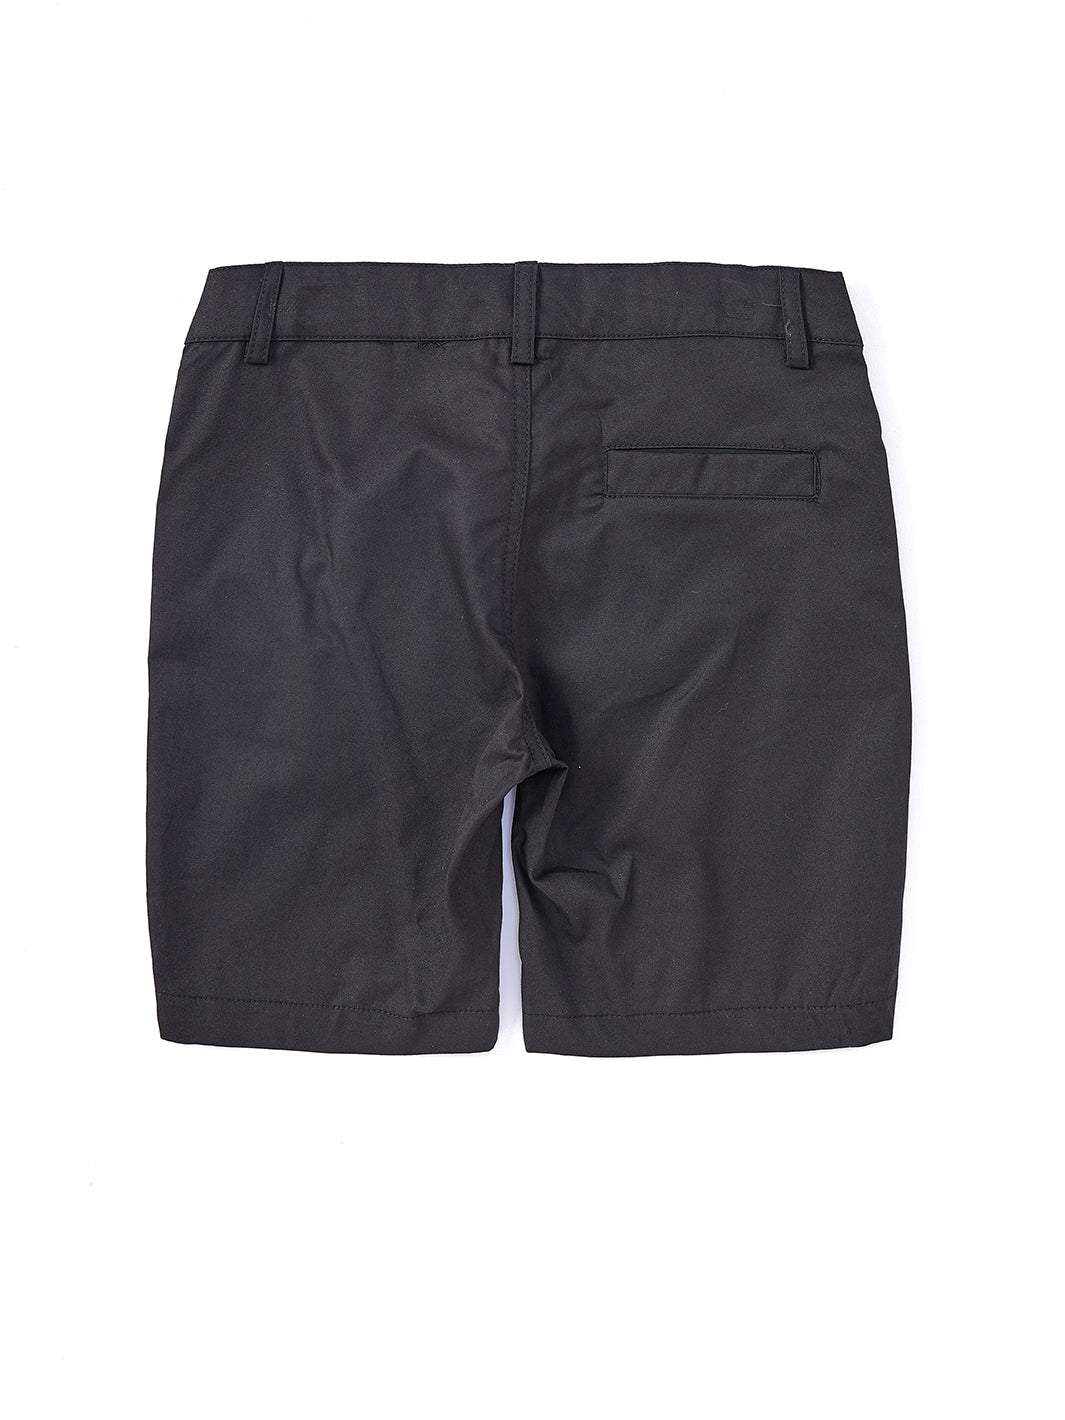 PTS Short Pants - Black